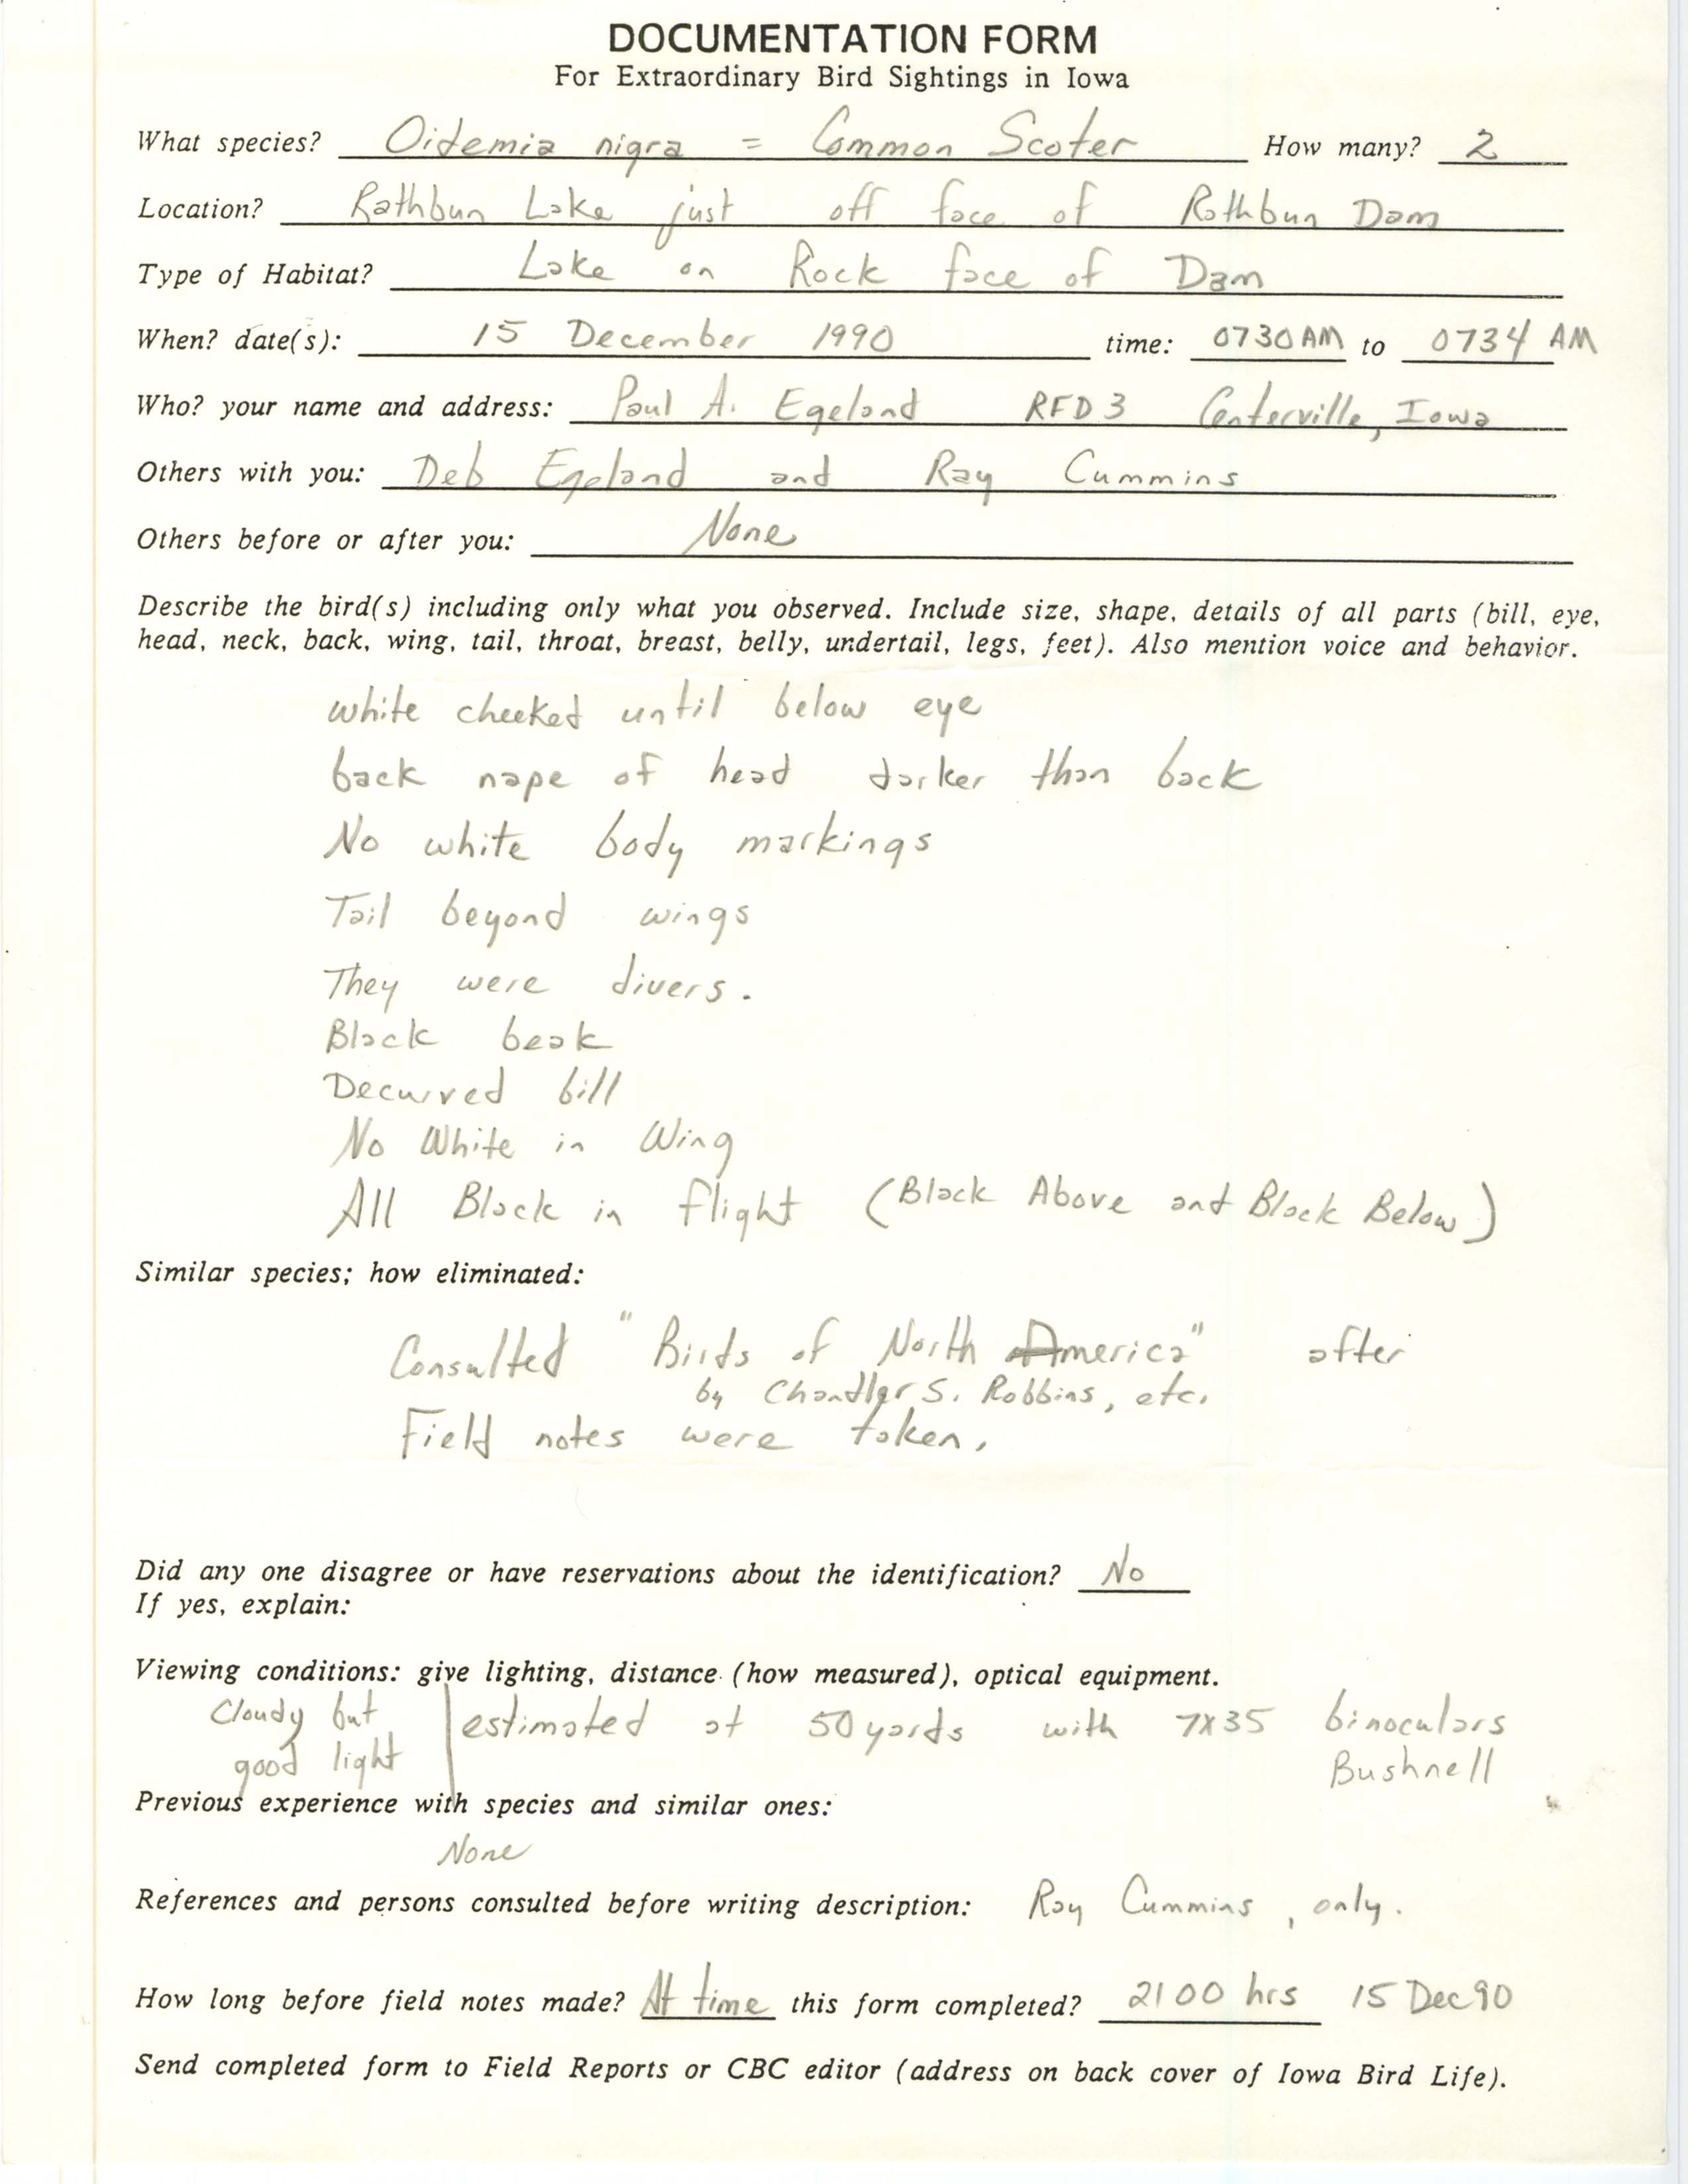 Rare bird documentation form for Black Scoter at Rathbun Lake, 1990